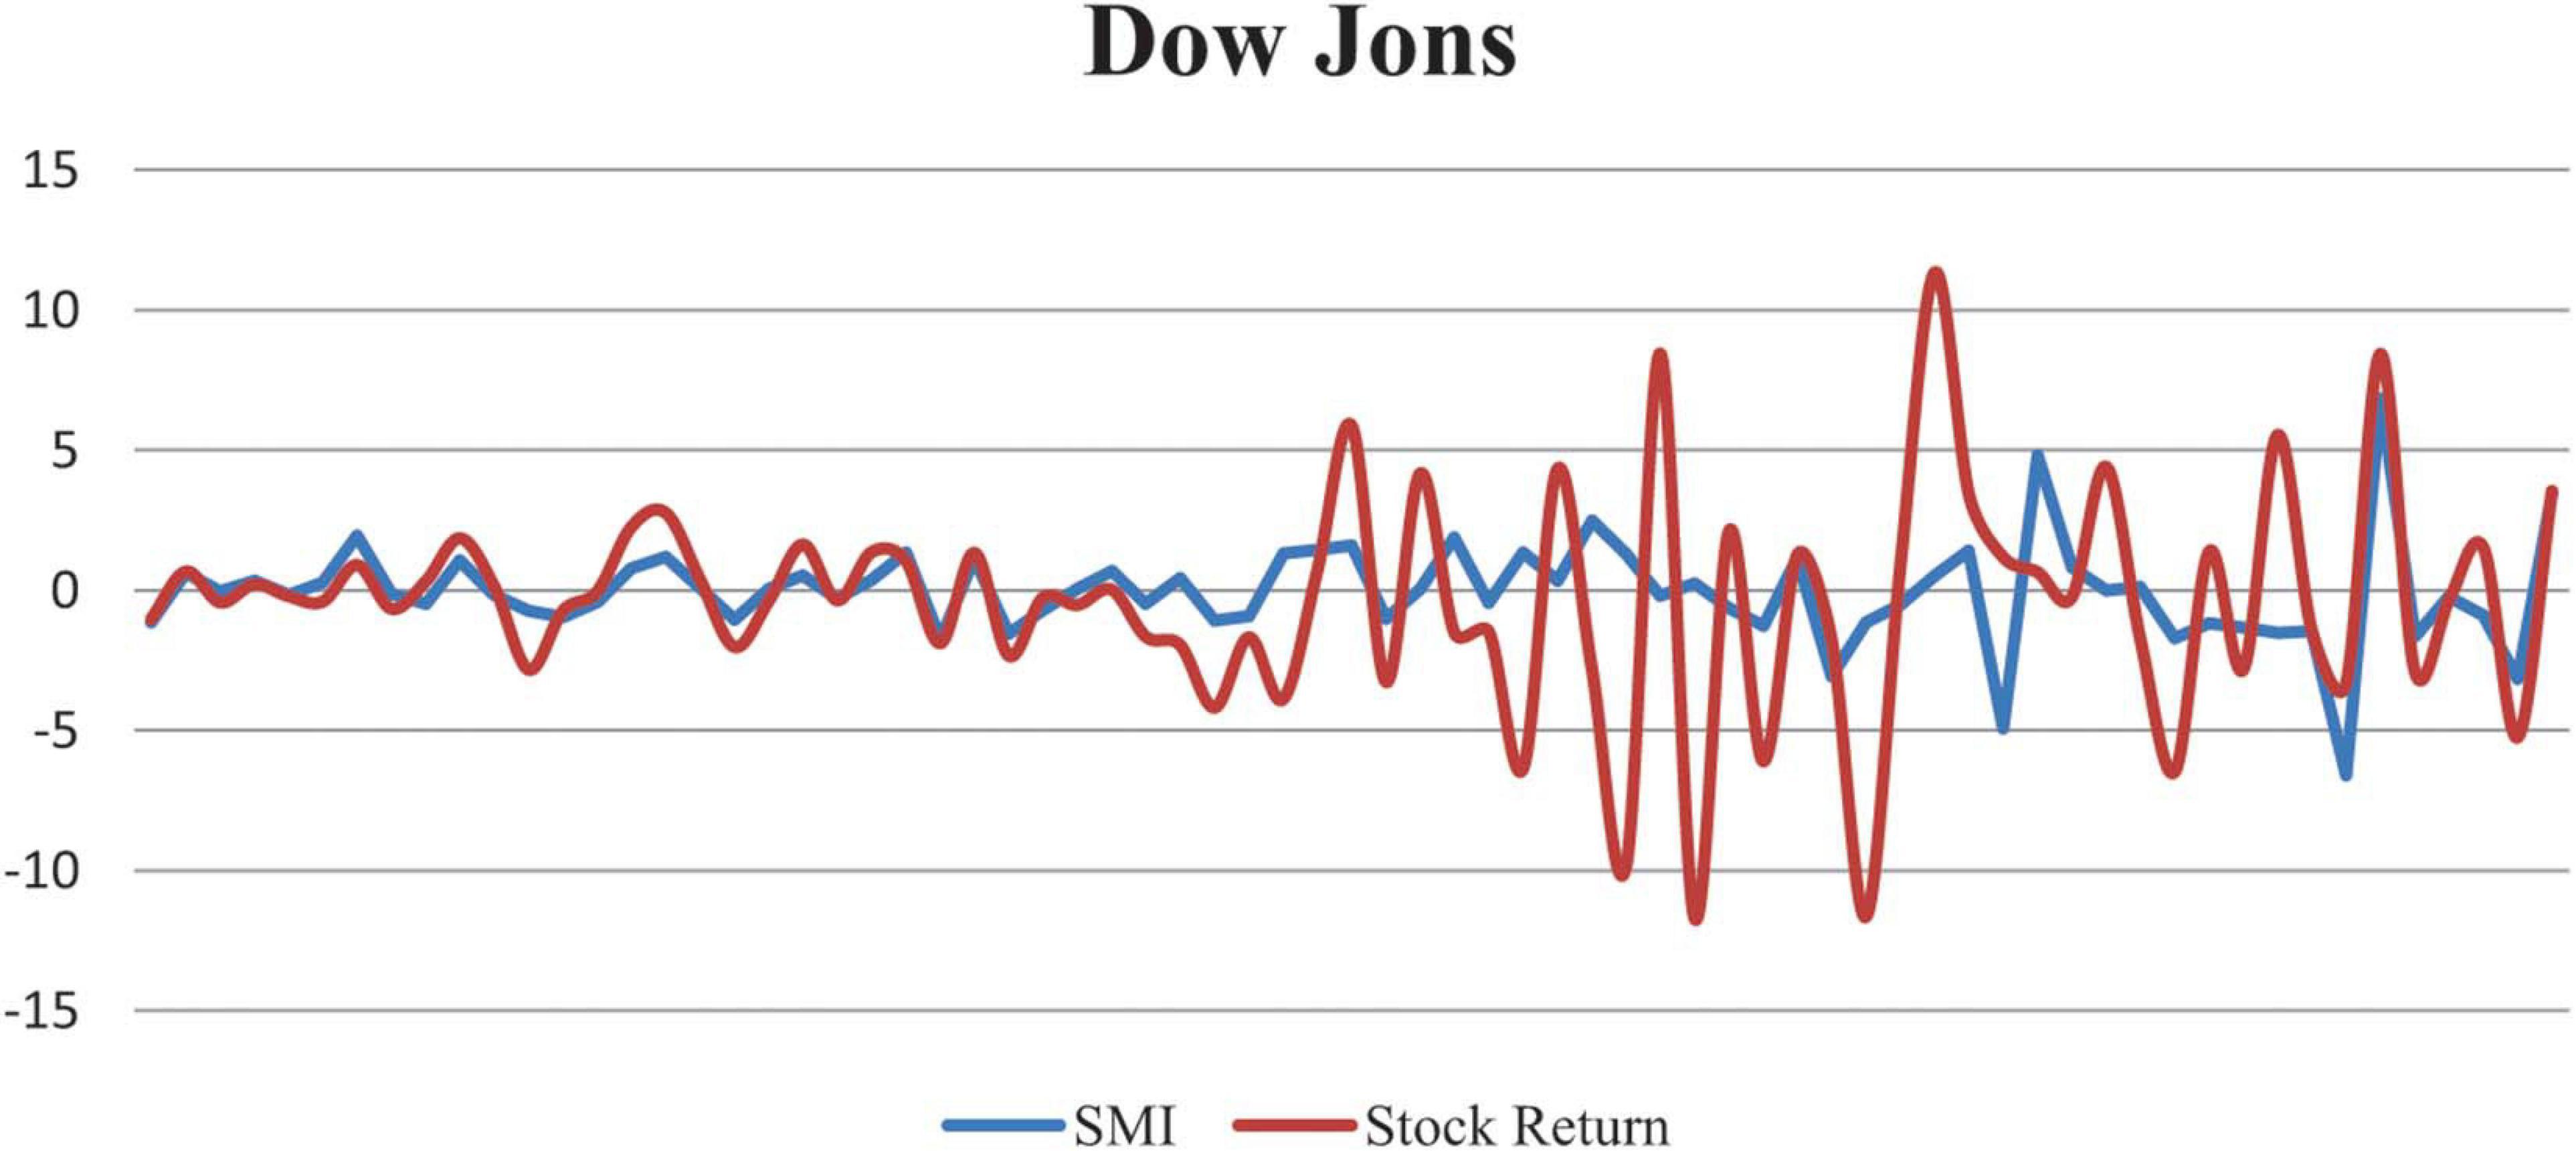 Market returns. Фондовый рынок Чехии. Average stock Market Return. Dow Jones Theory. Dow Jones Industrial average on Jul 20, 2018.